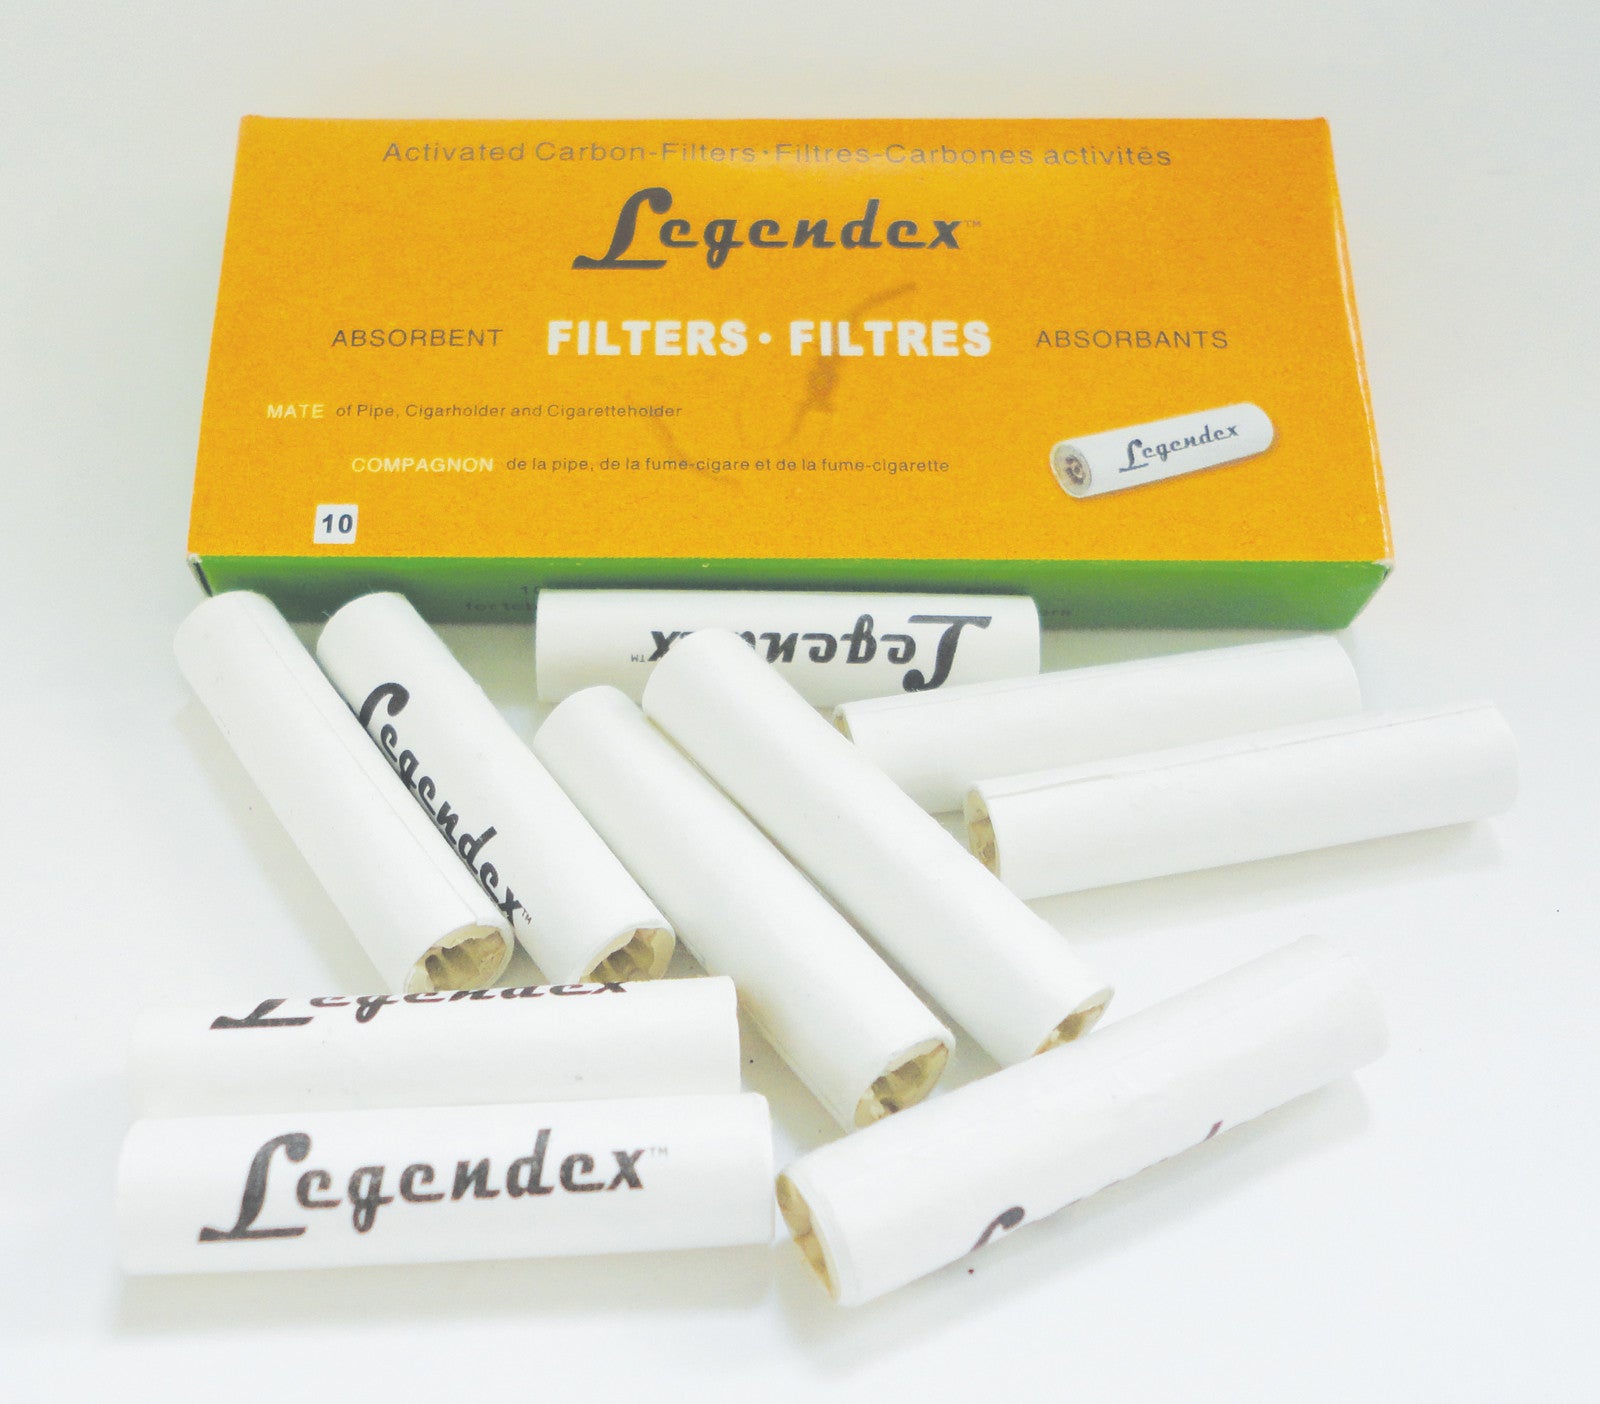 Legendex Giant 9 MM Filtered Pipe - Starter kit Bundle 01-08-605b